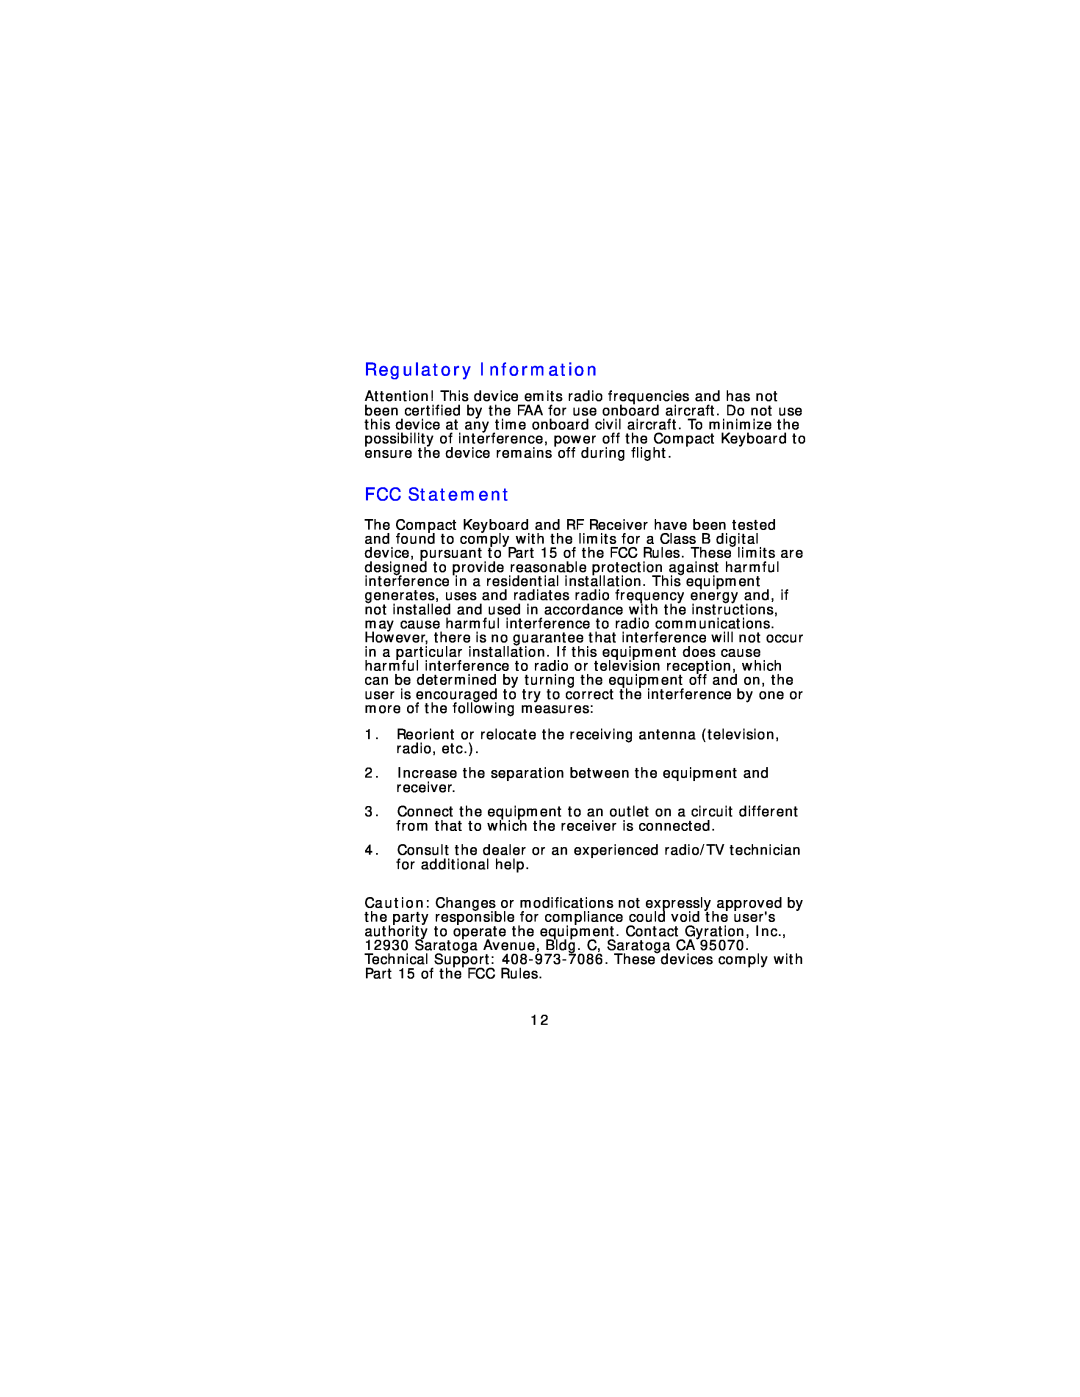 Gyration Compact Keyboard user manual Regulatory Information, FCC Statement 